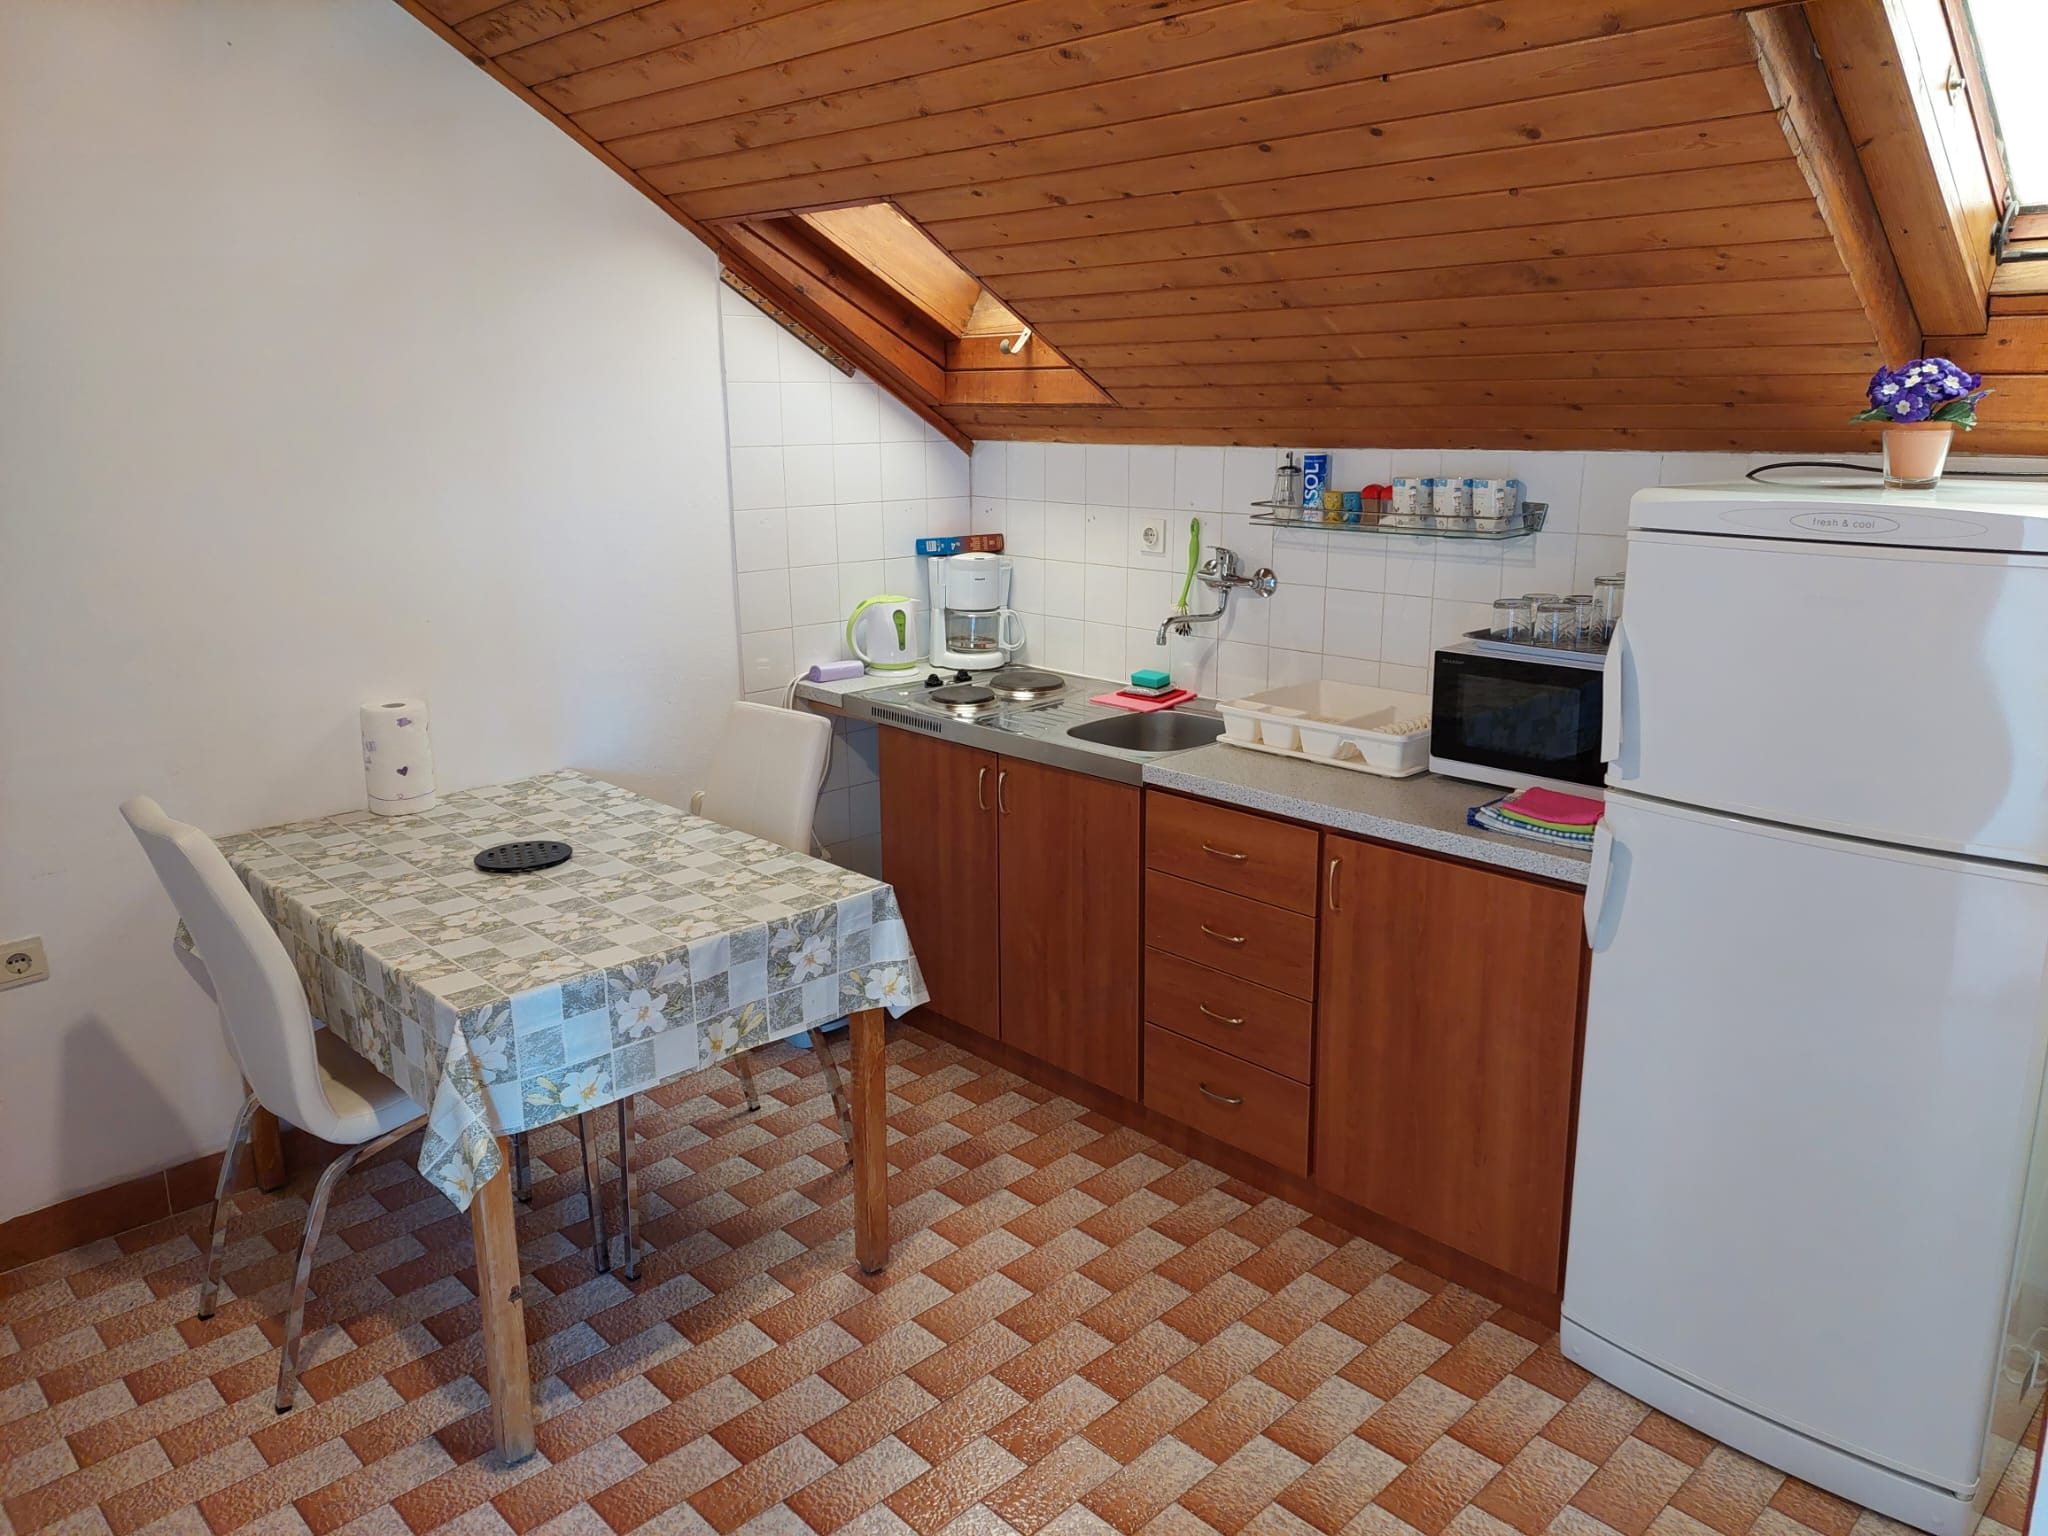 Apartment-4-kitchen-view1